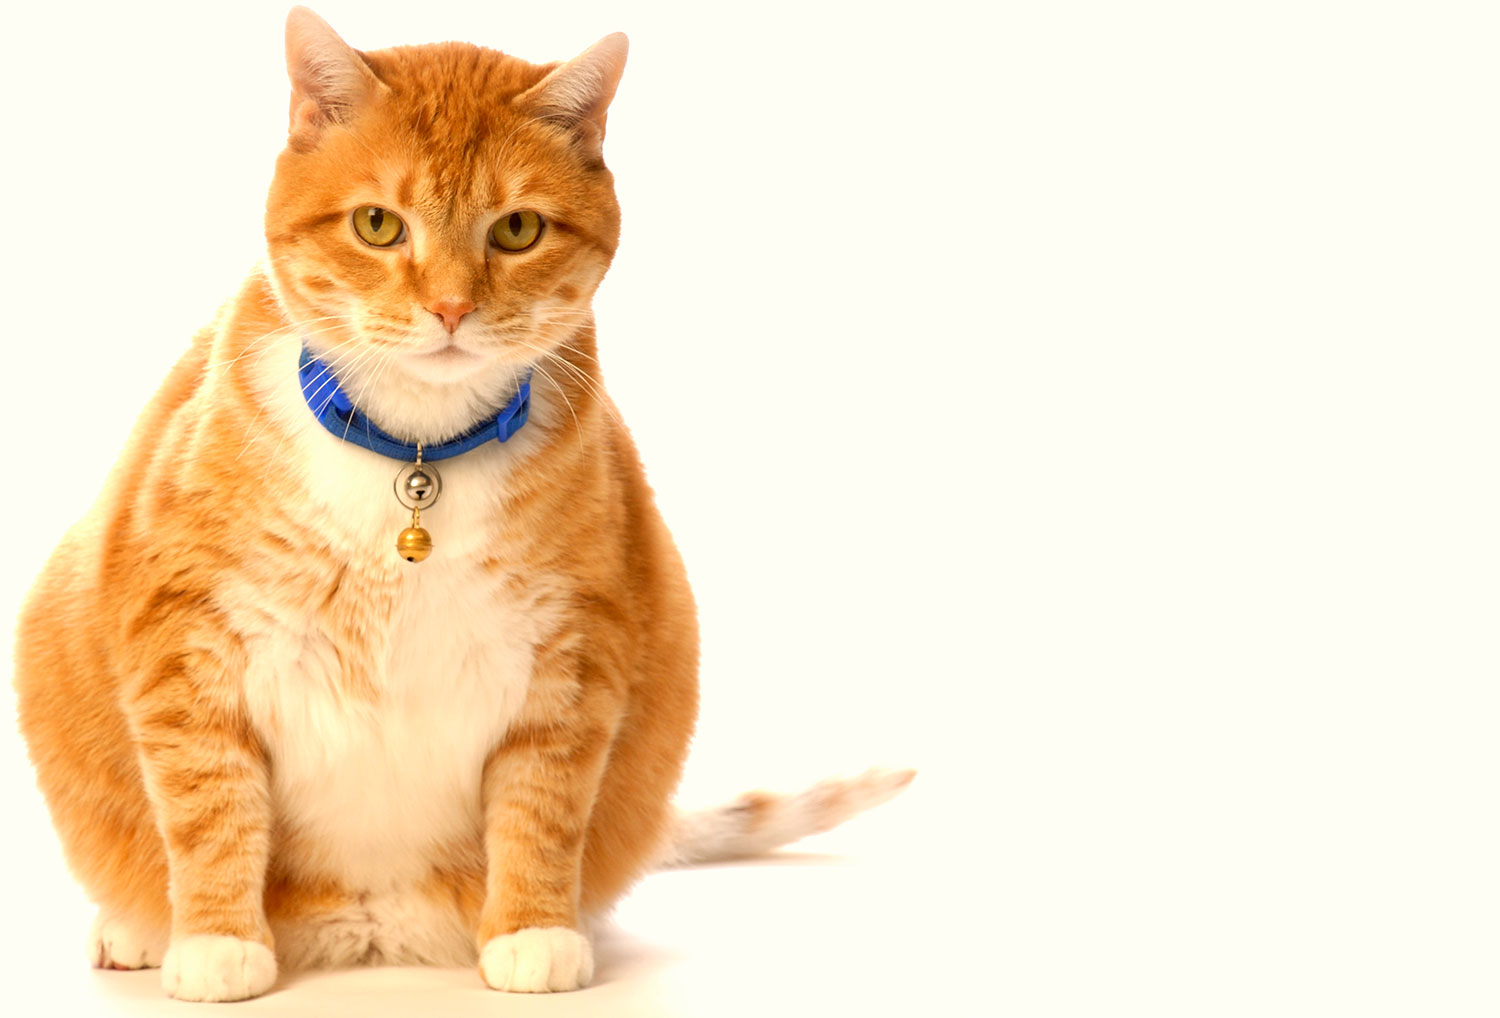 https://www.aaha.org/globalassets/05-pet-health-resources/your-pet/new-articles/over-weight-orange-cat.jpg